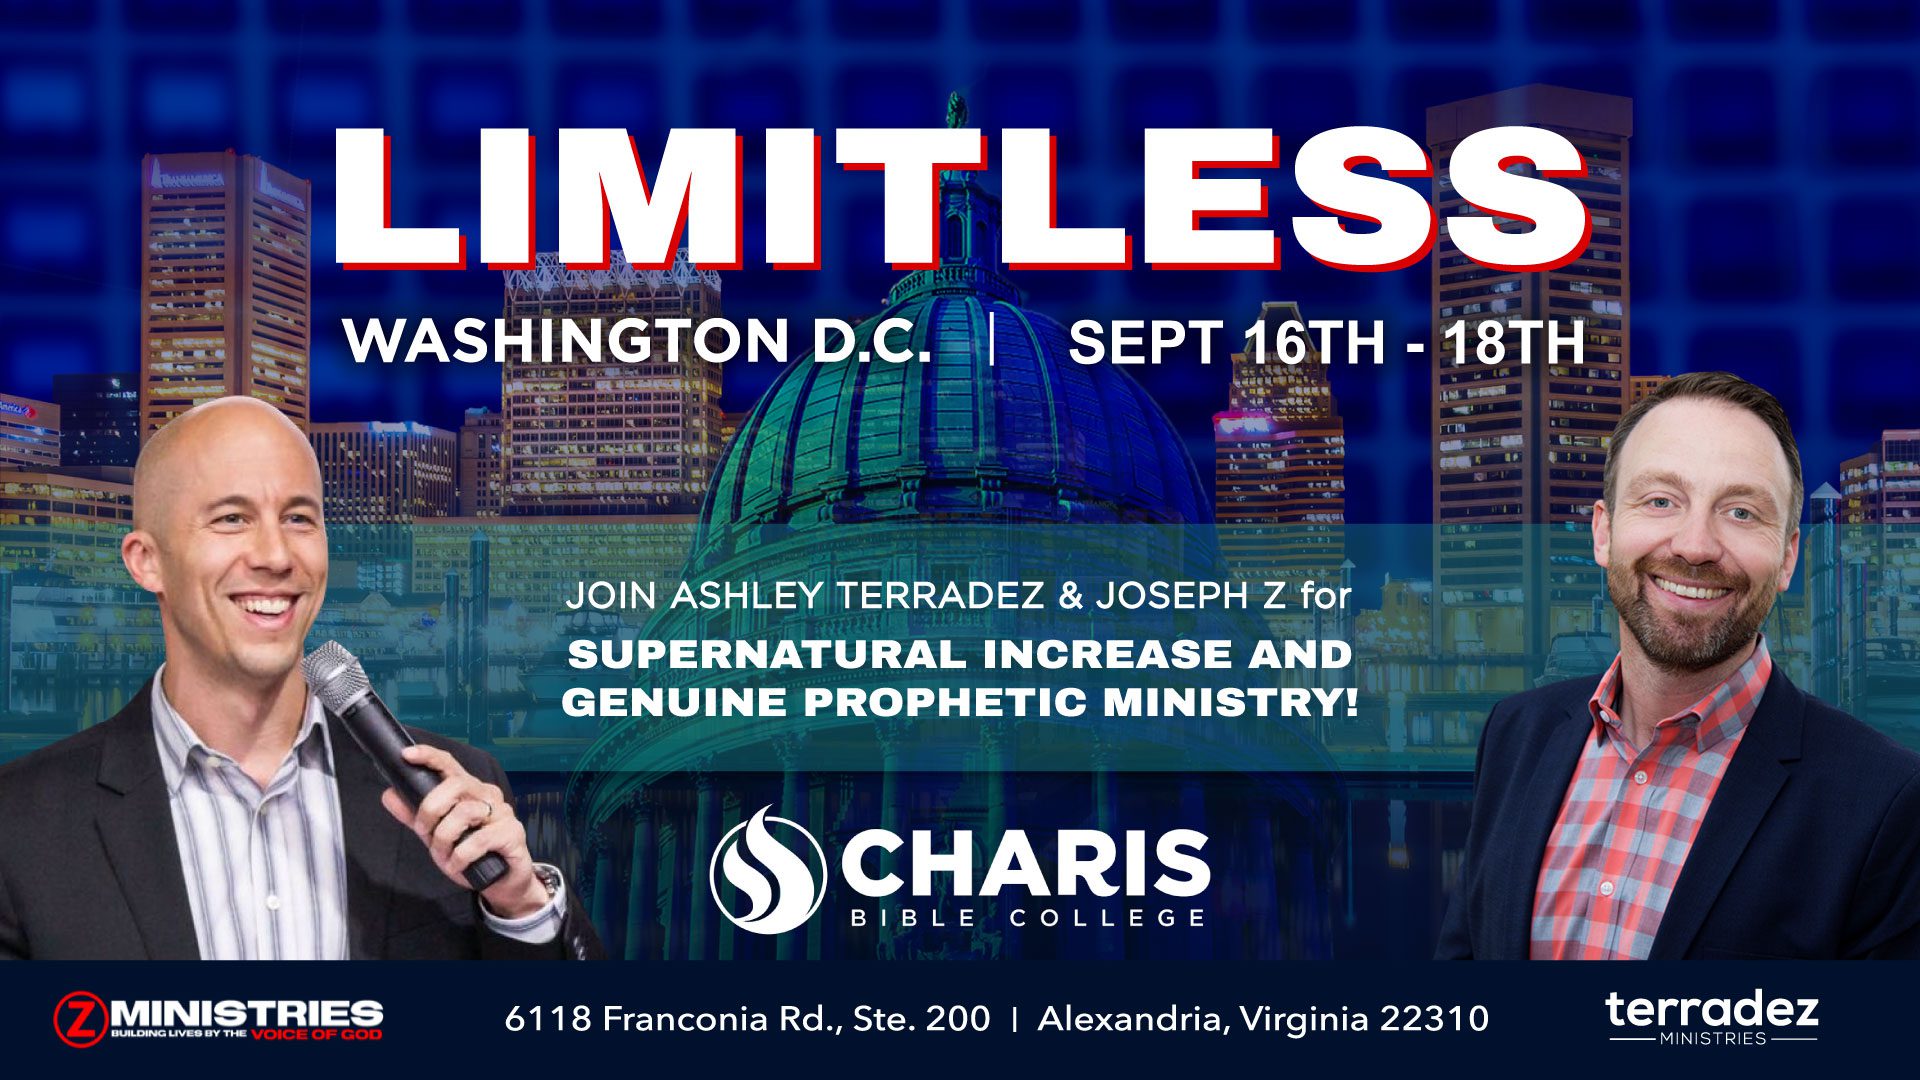 Limitless Washington D.C. with Ashley Terradez and Joseph Z